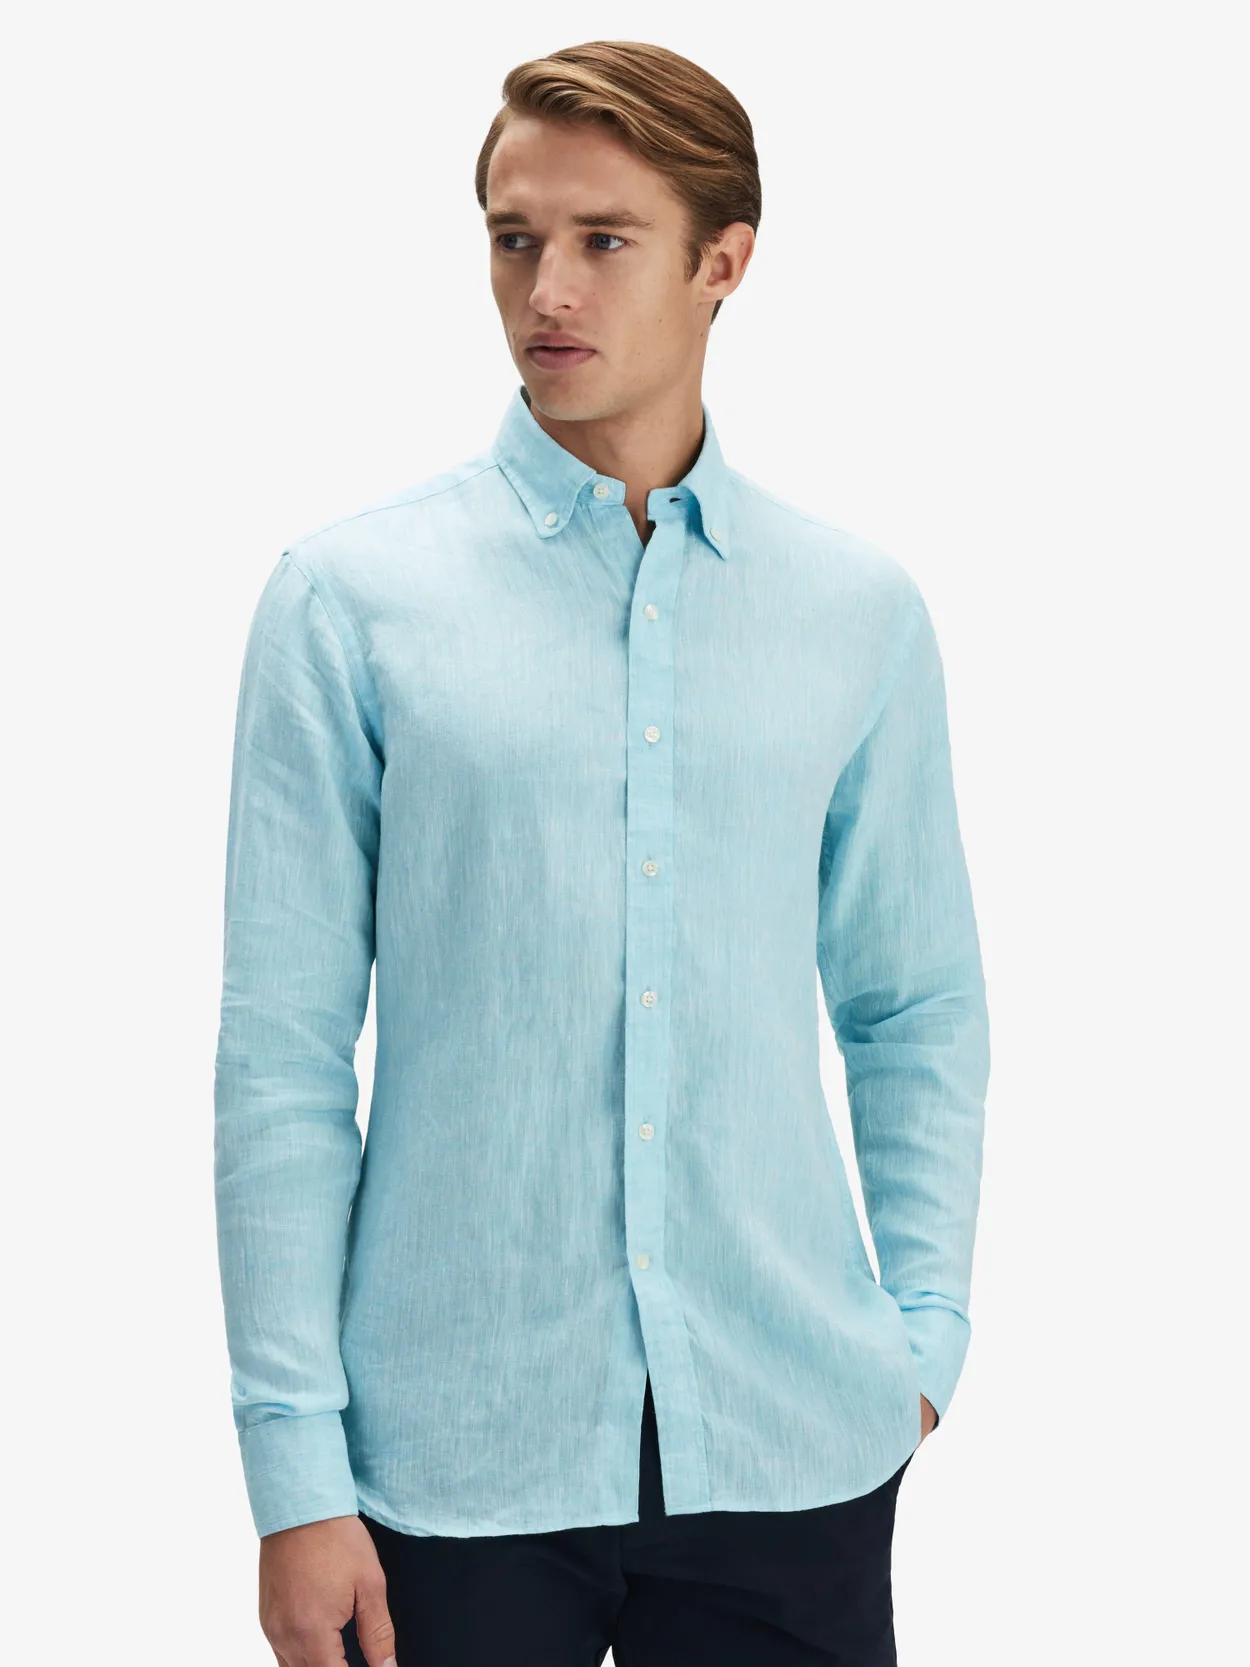 Turquoise Linen Shirt